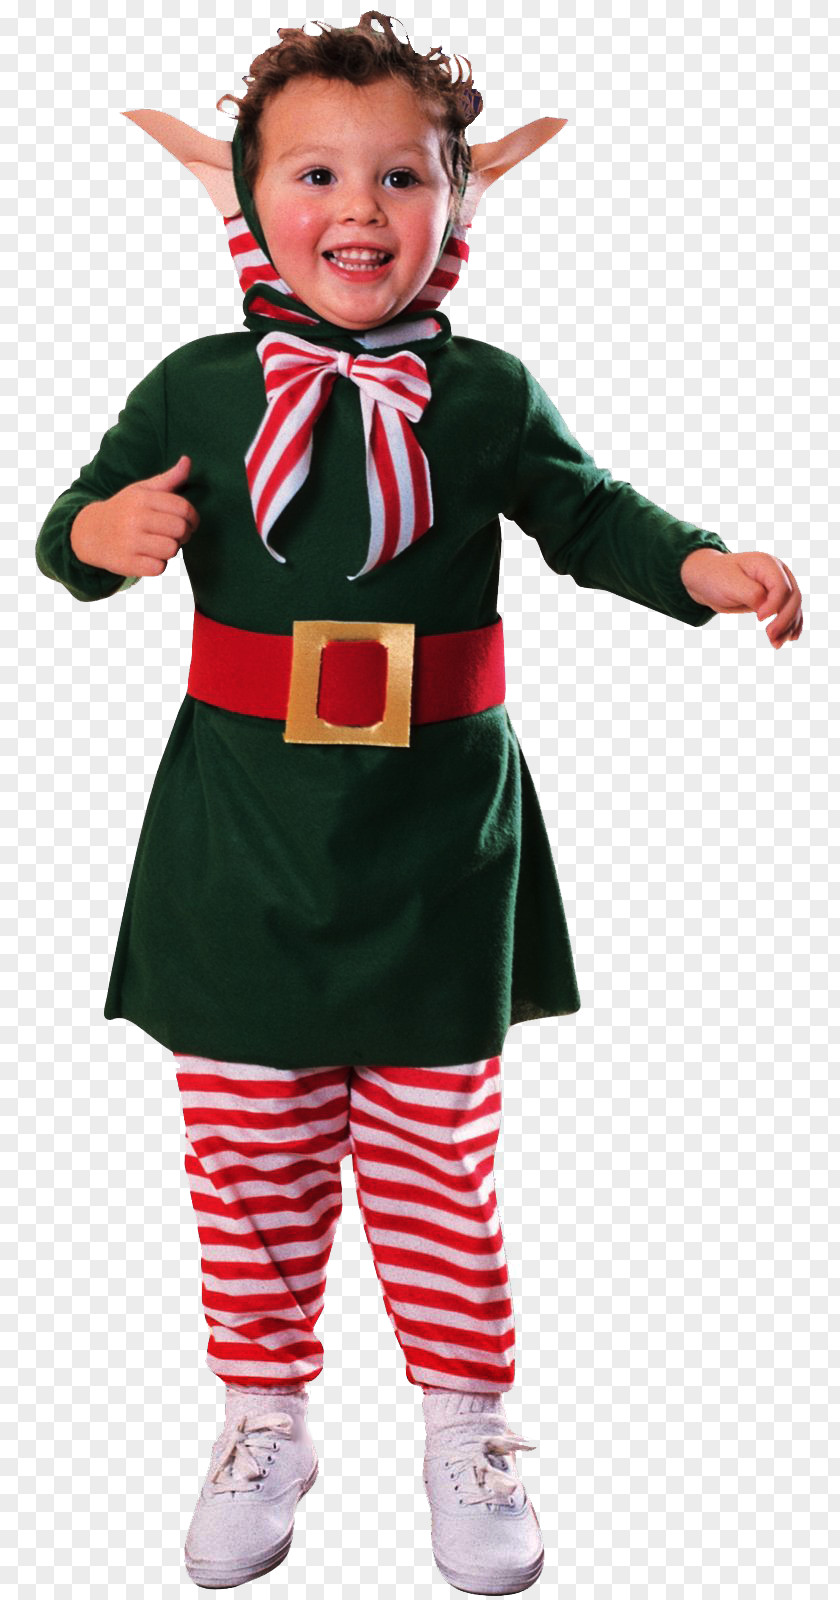 Christmas Elf Santa Claus Costume Clothing Suit Child PNG